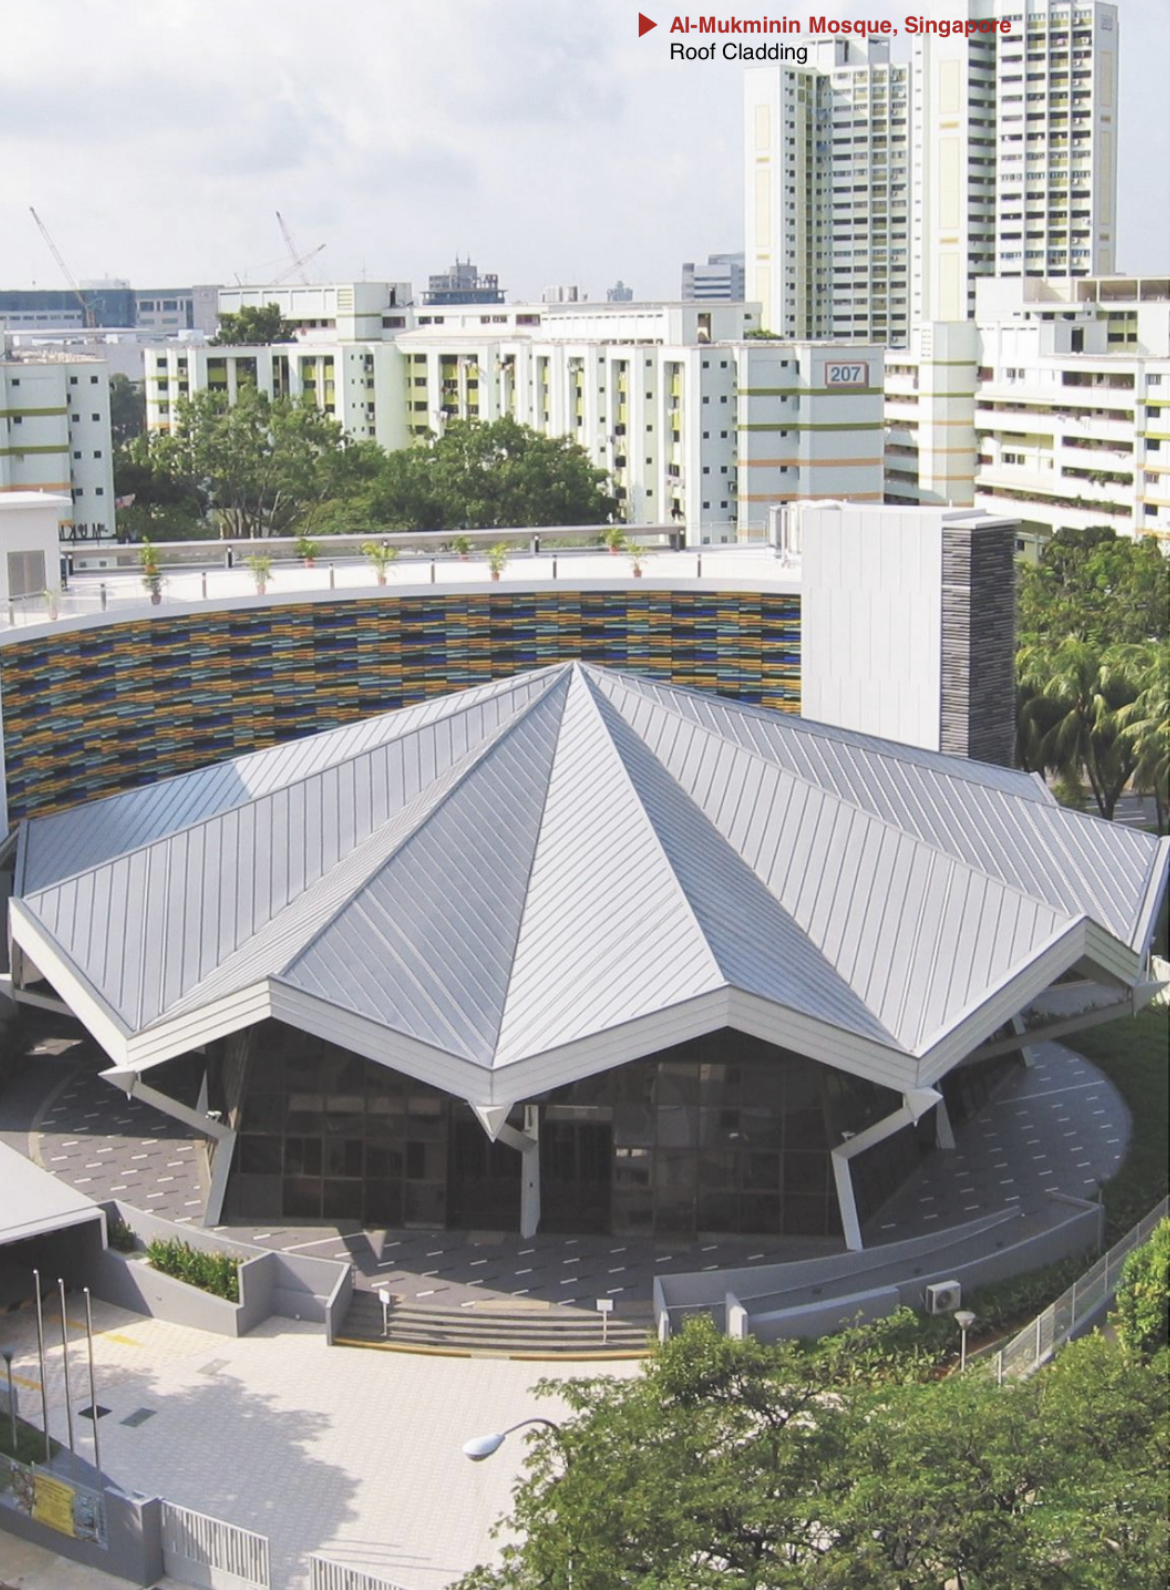 Al-Mukminin Mosque, Singapore